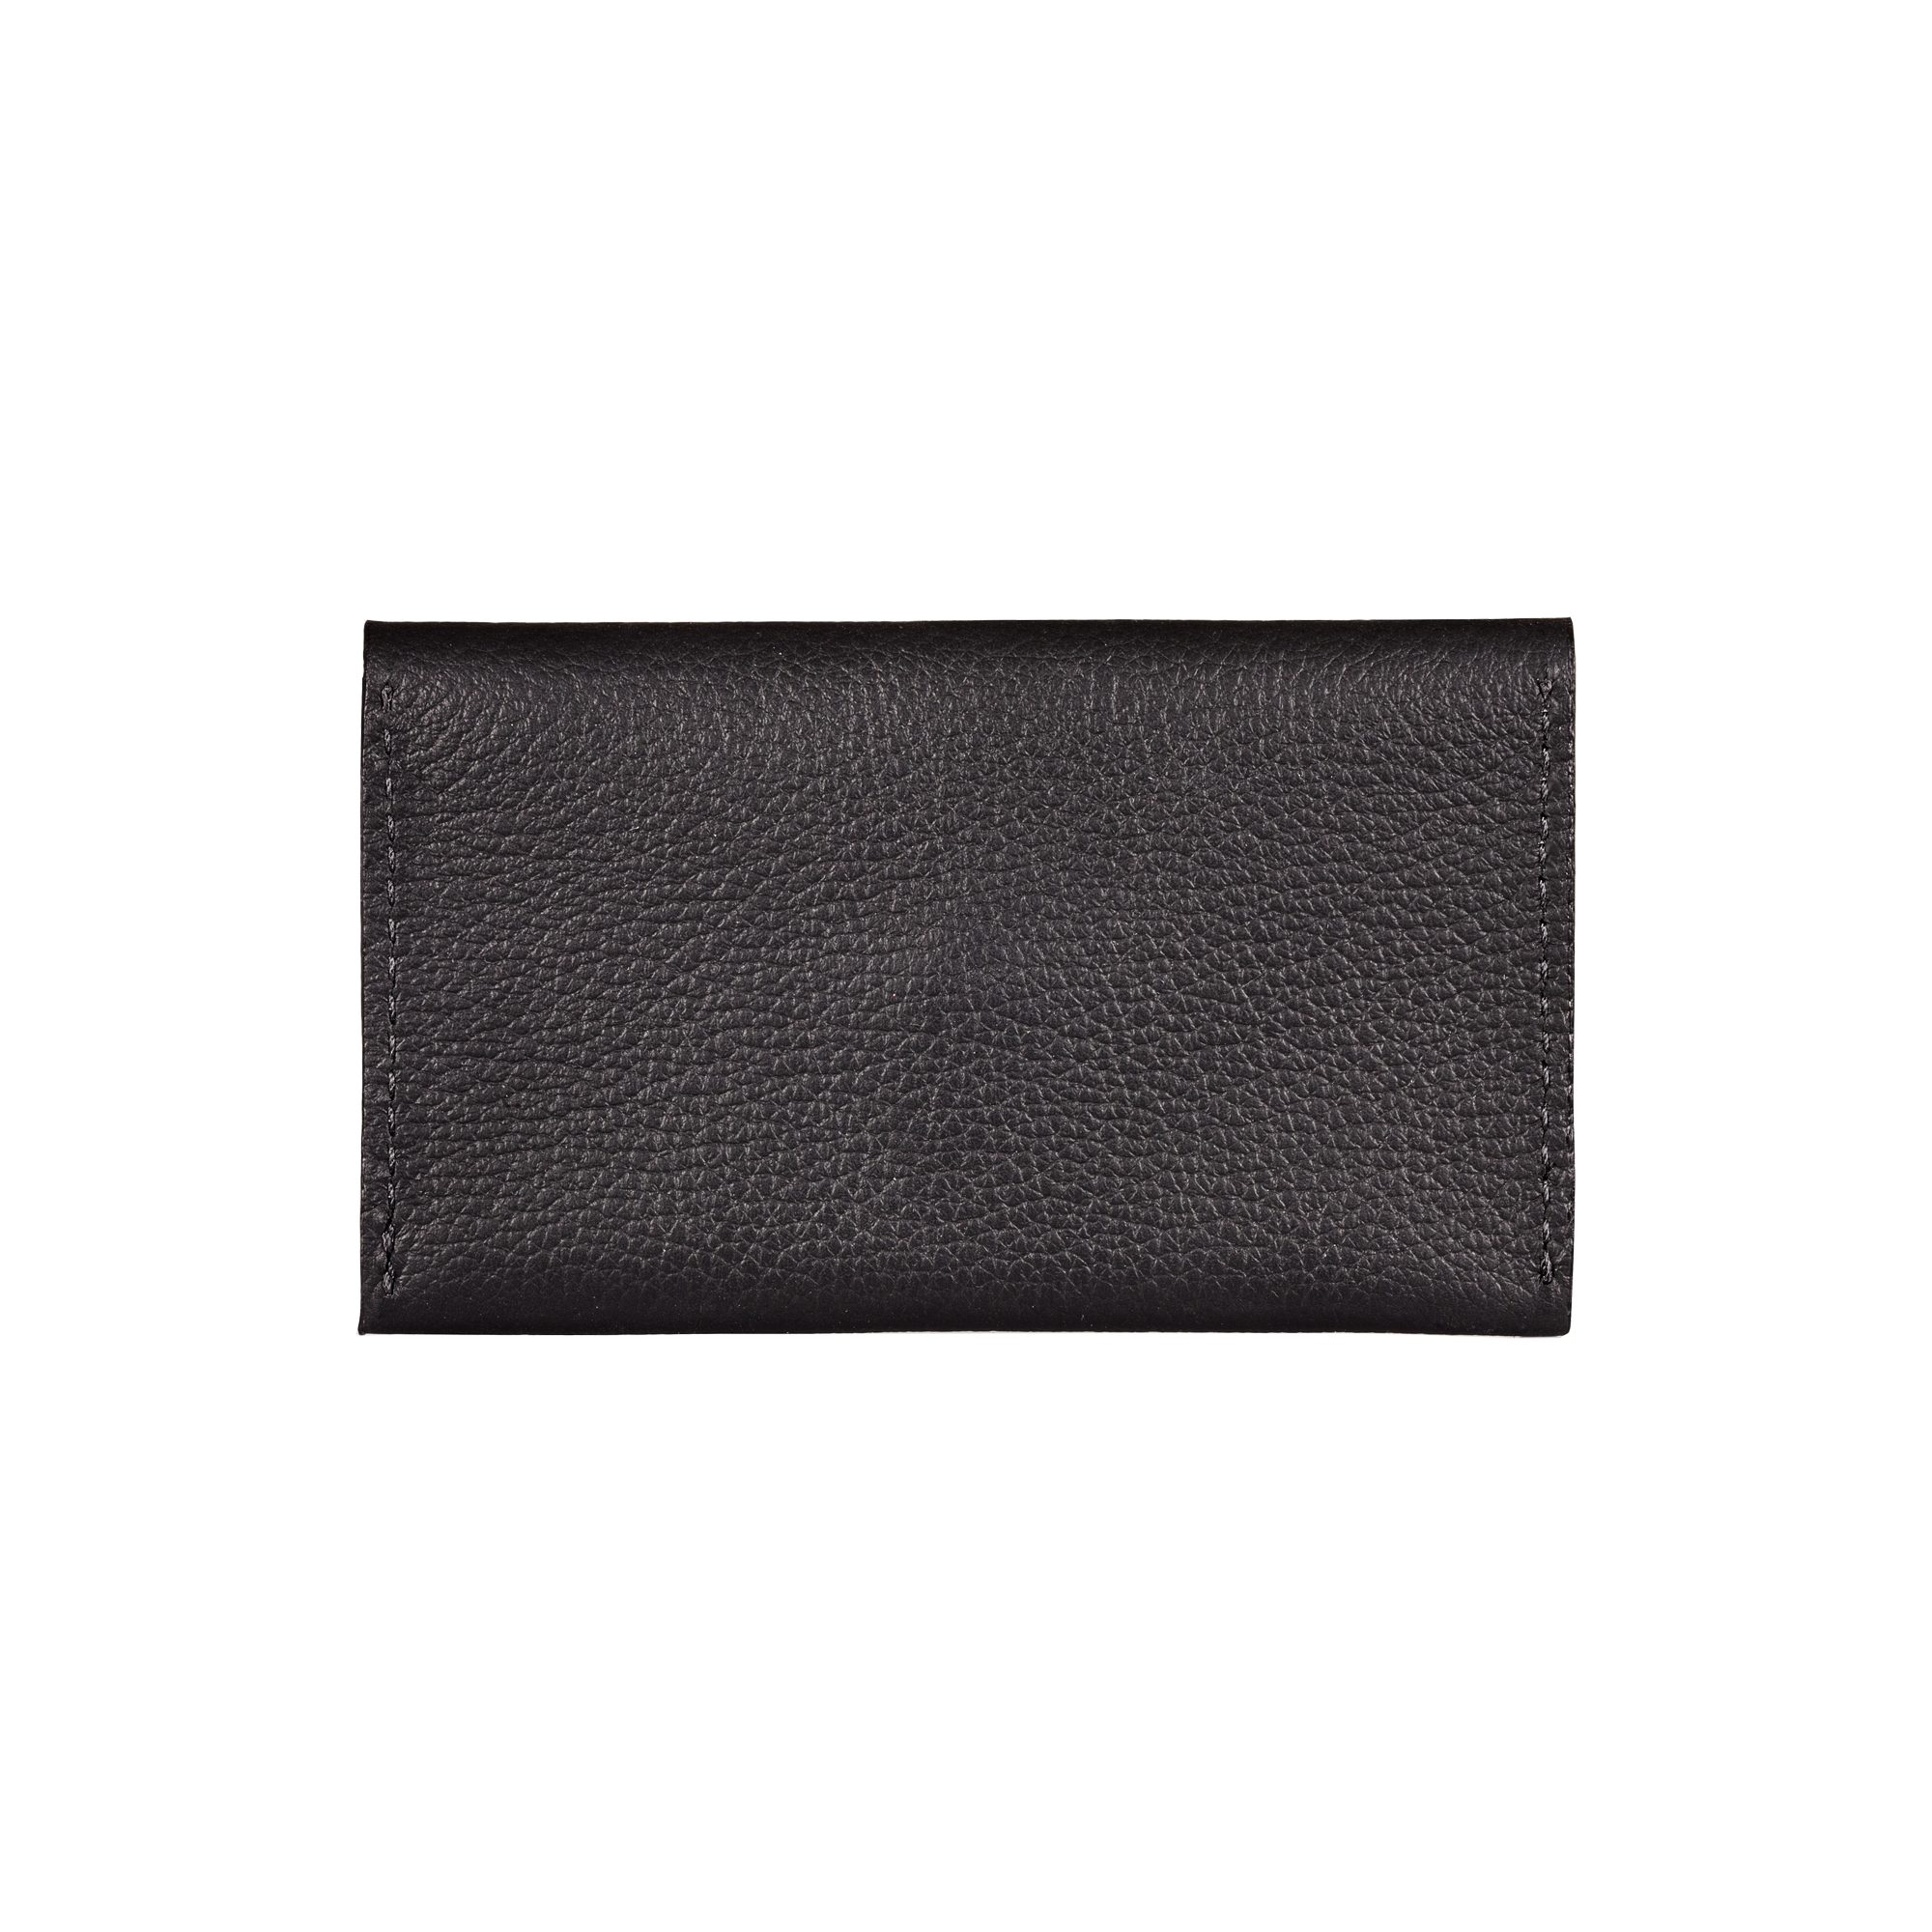 Business Card Holder, Grain Leather Black/Black, MAISON JMK-VONMEL Luxe Gifts